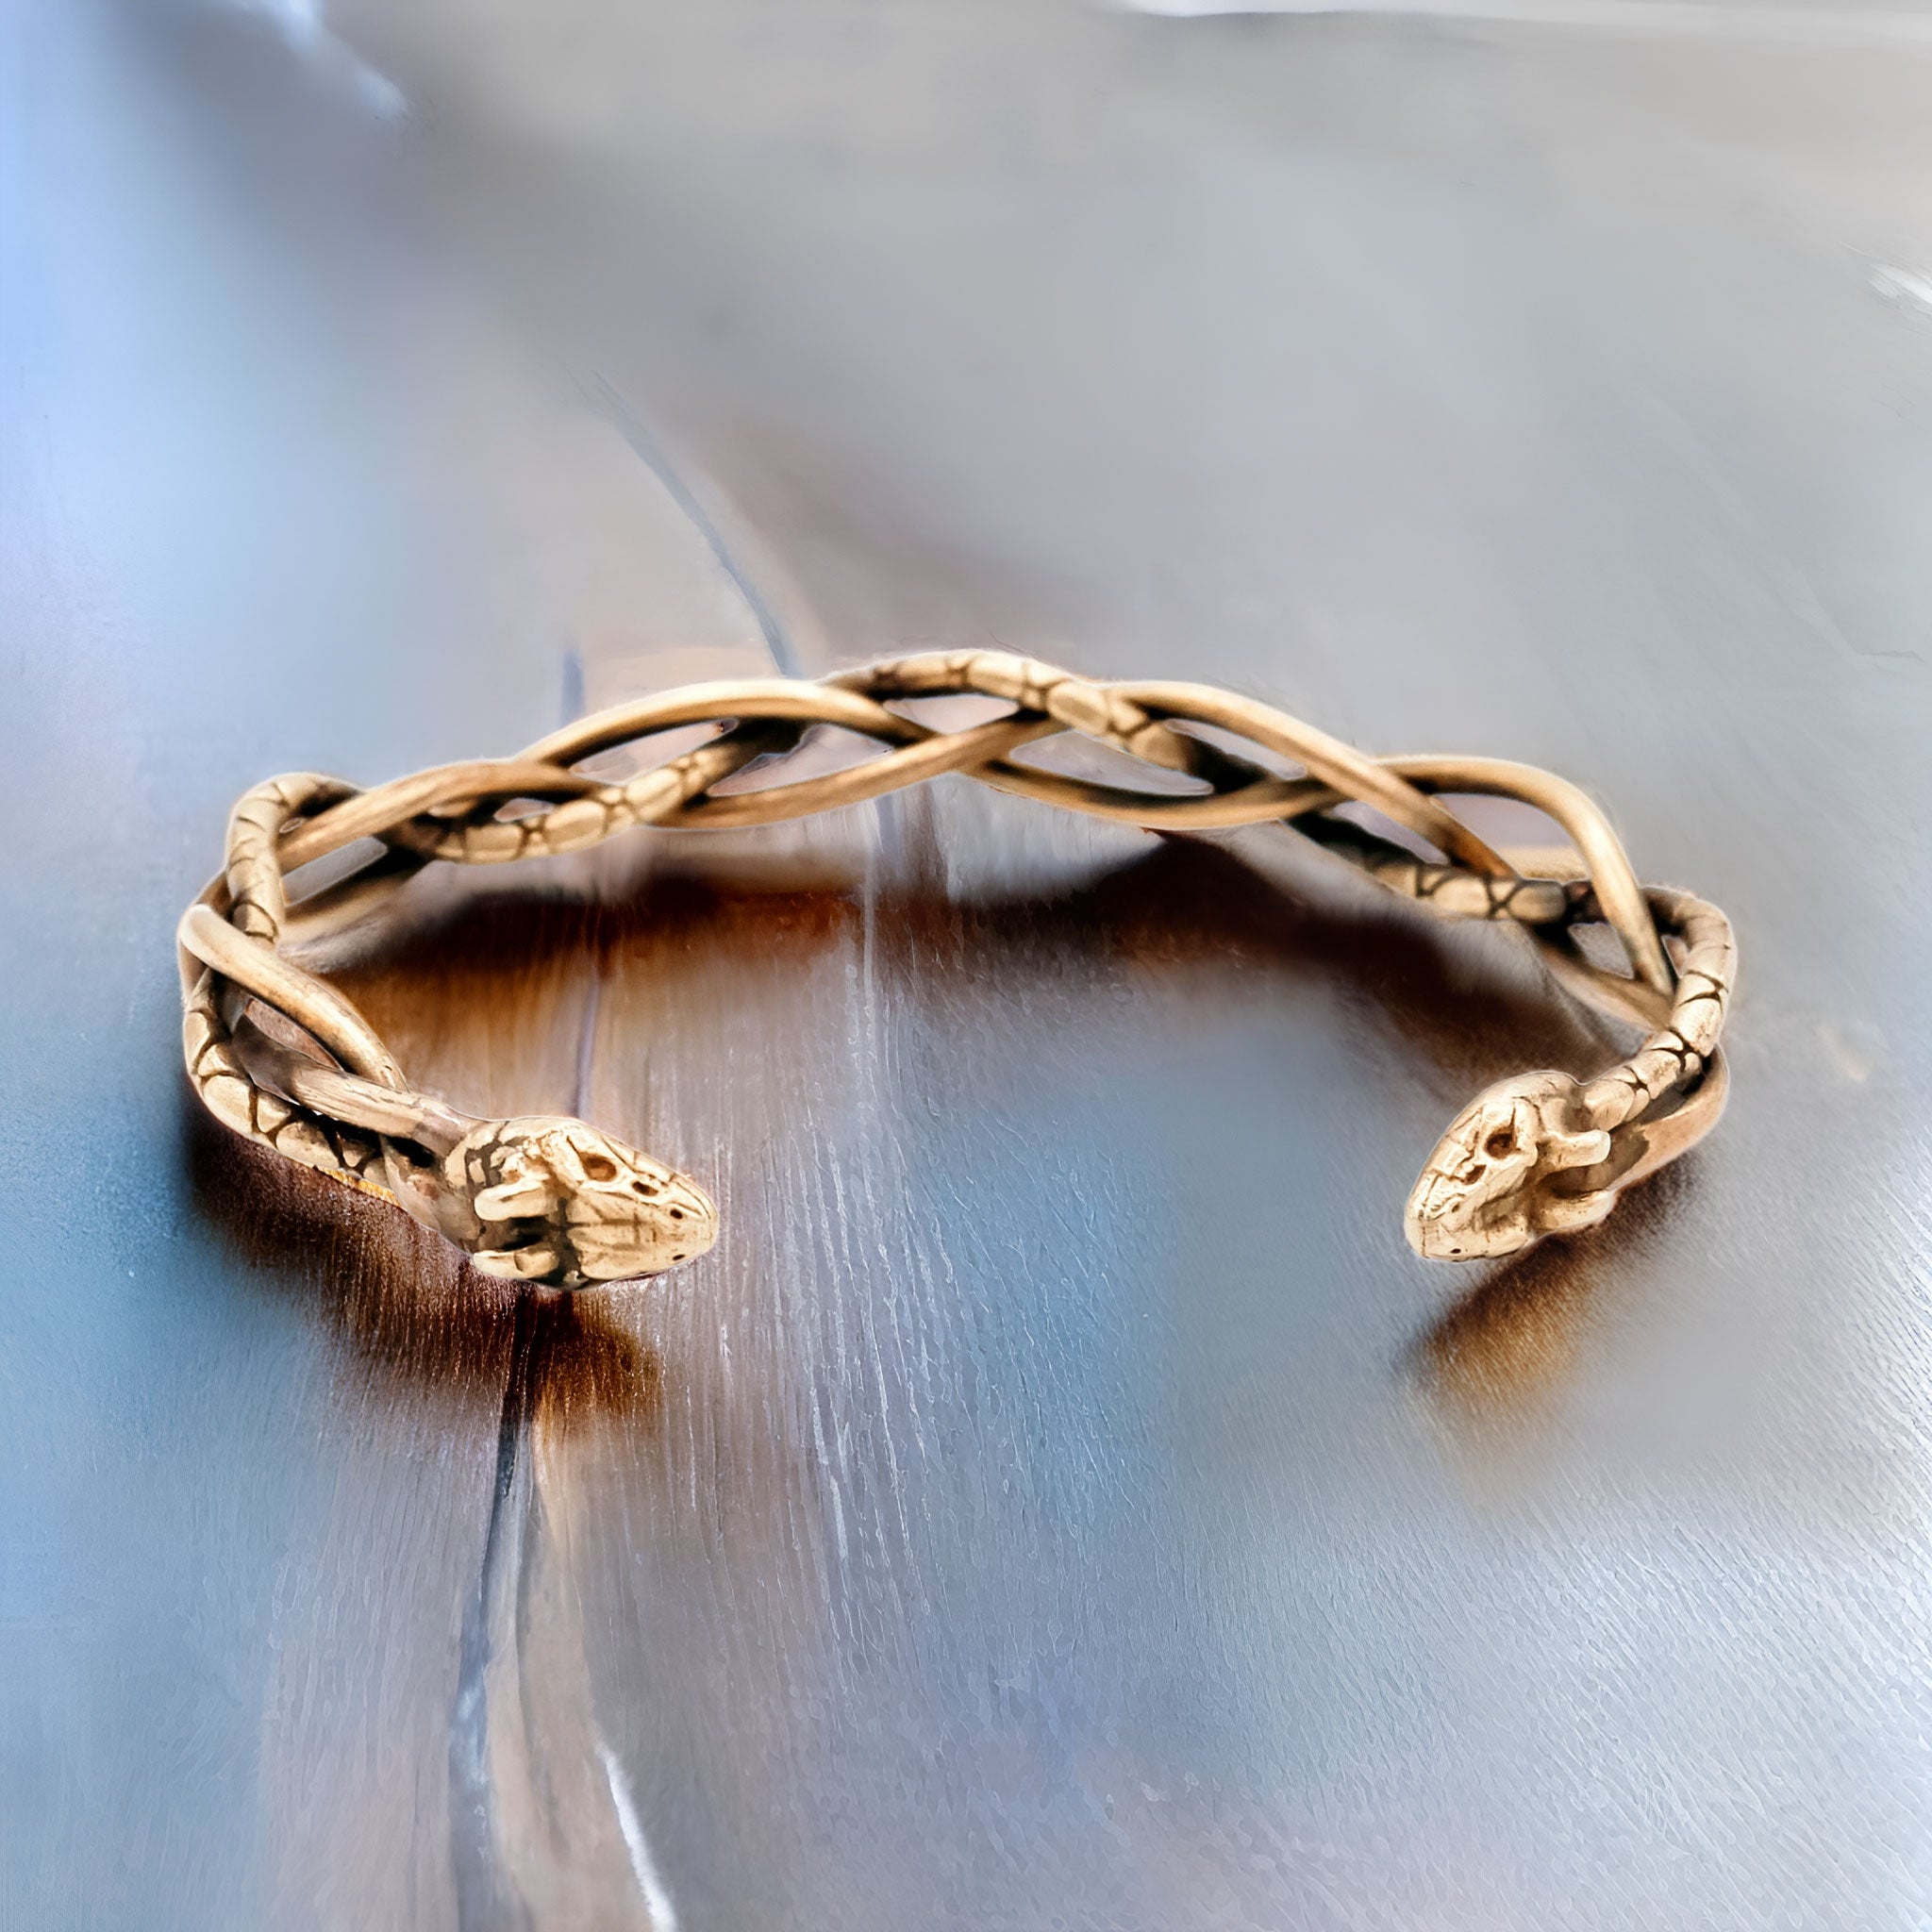 Mesh gold snake bracelet with red eyes | Vintage style wrap bracelet